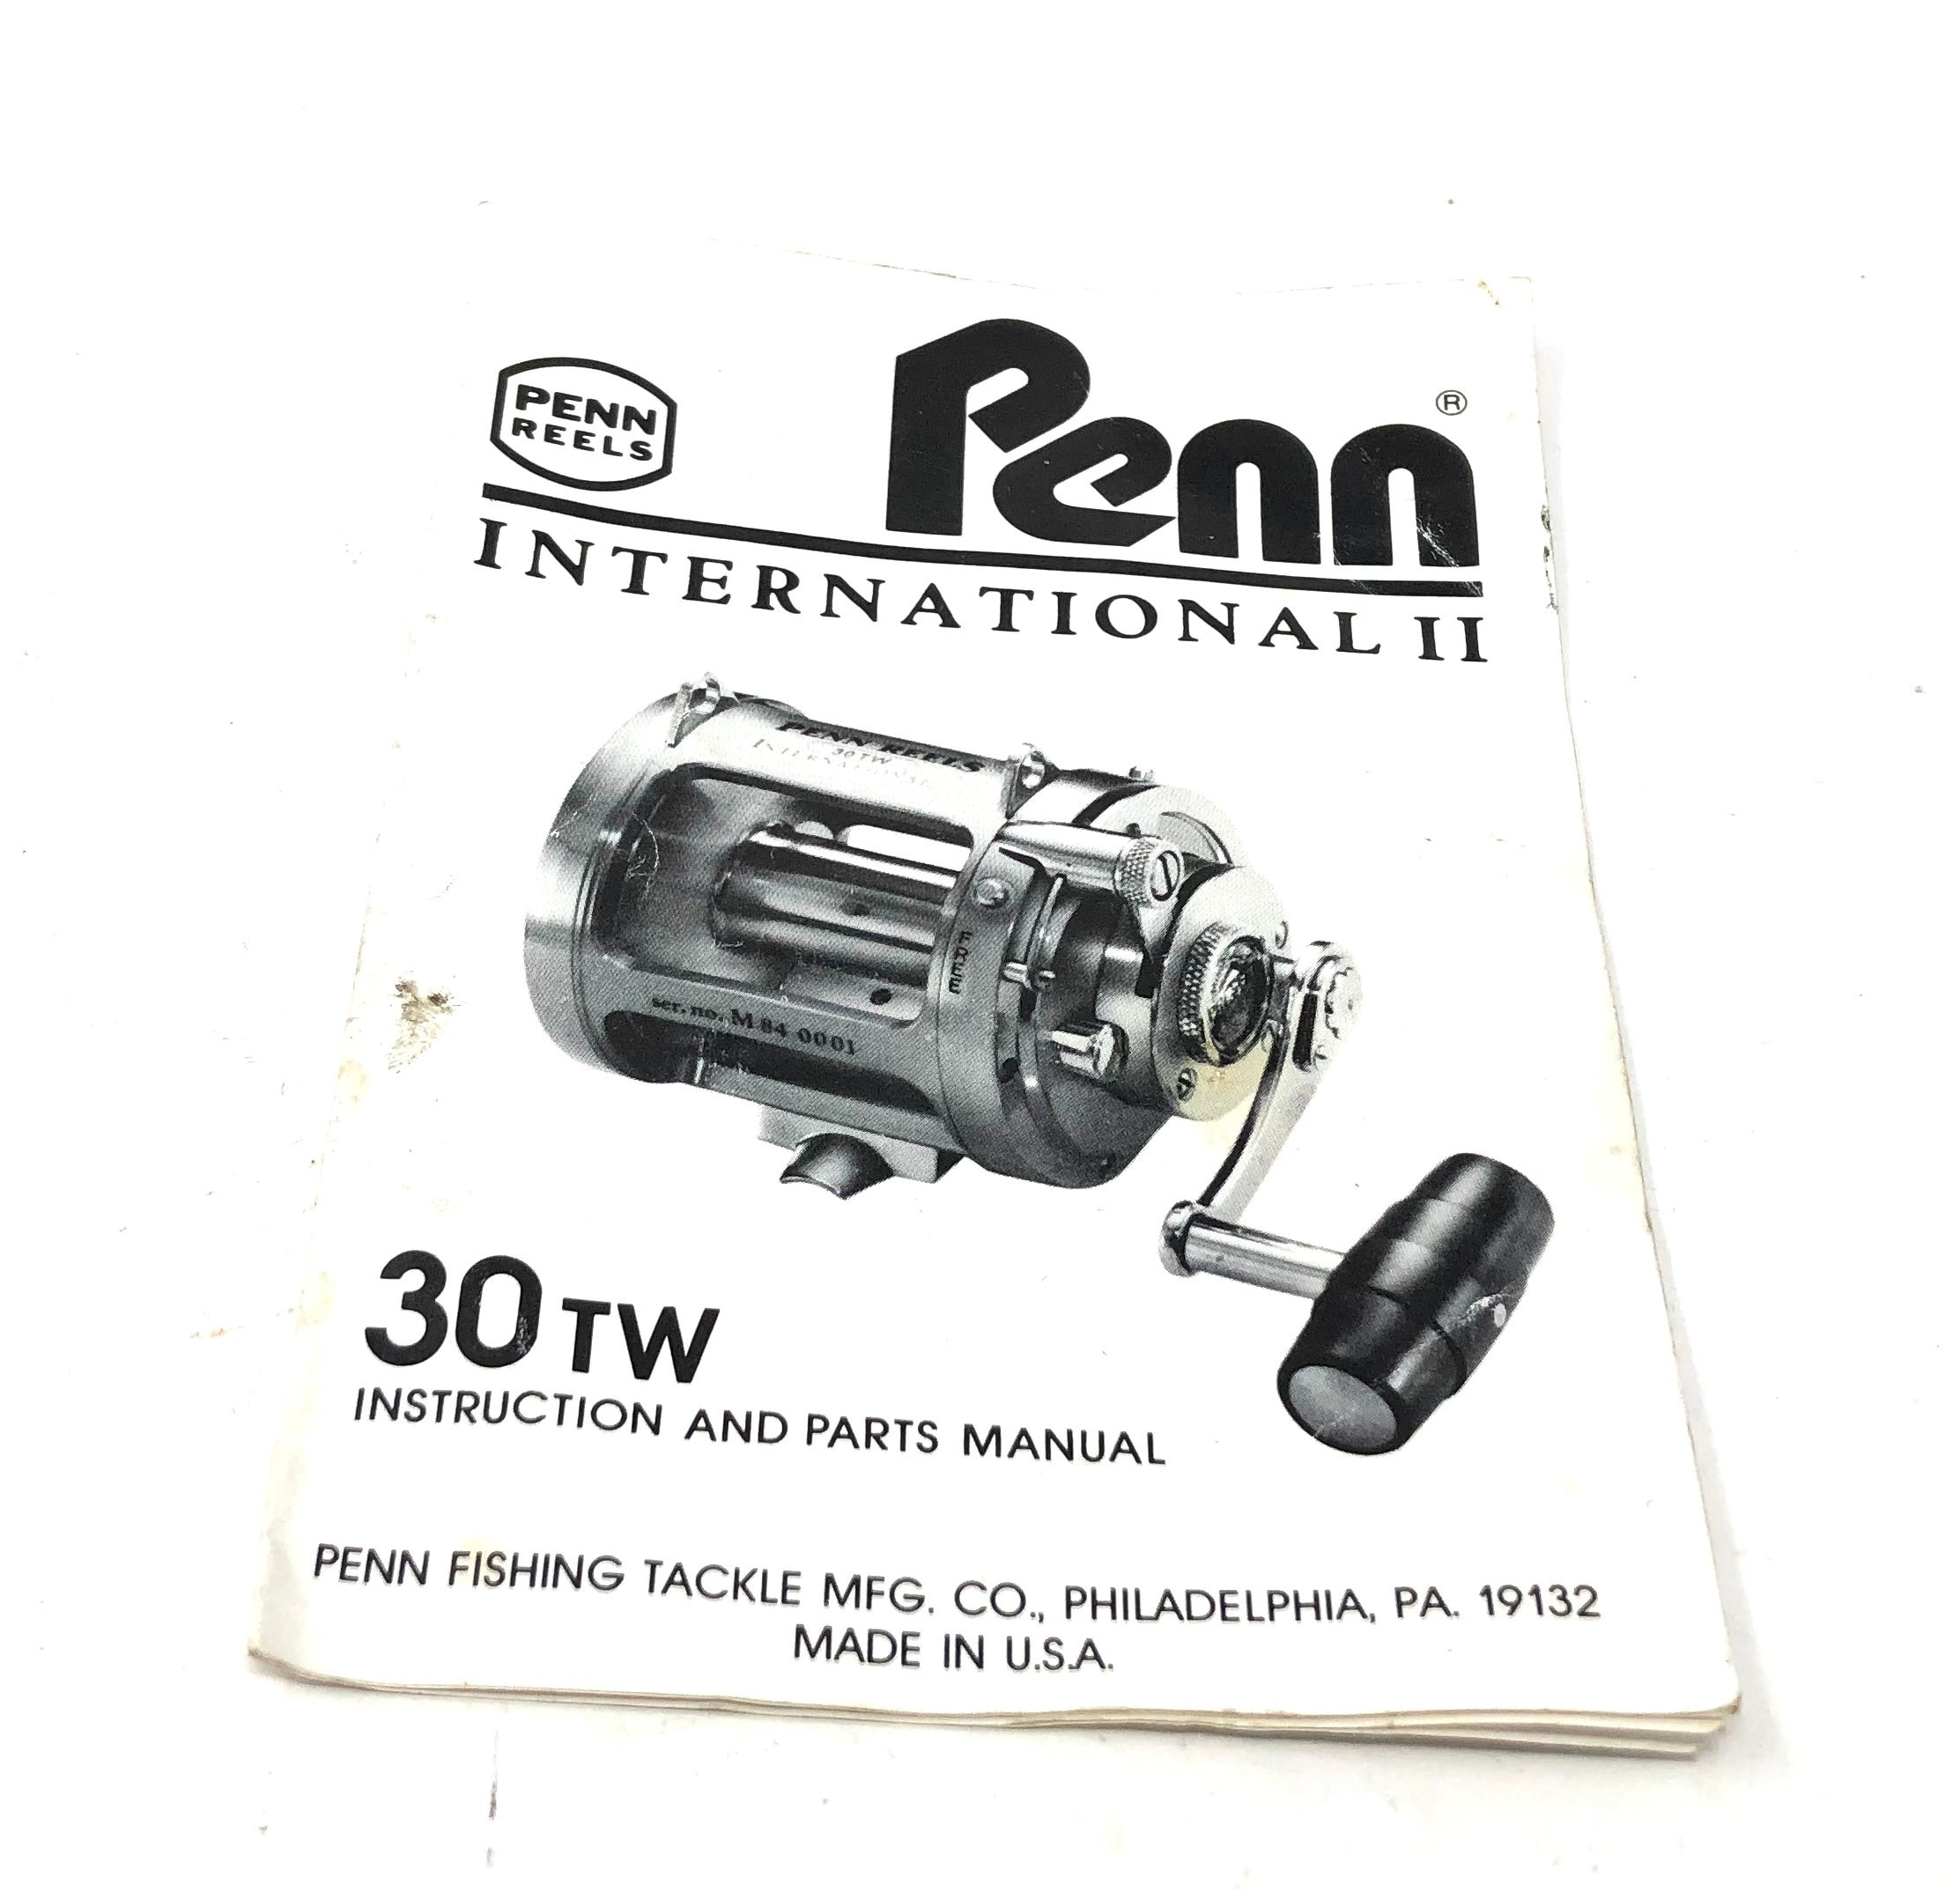 3 Vintage Penn Reel Instruction and Parts Manuals / Penn International II  30 TW Manual / Penn Jibmaster 500 Series Manual / Penn 40B Manual -   Hong Kong